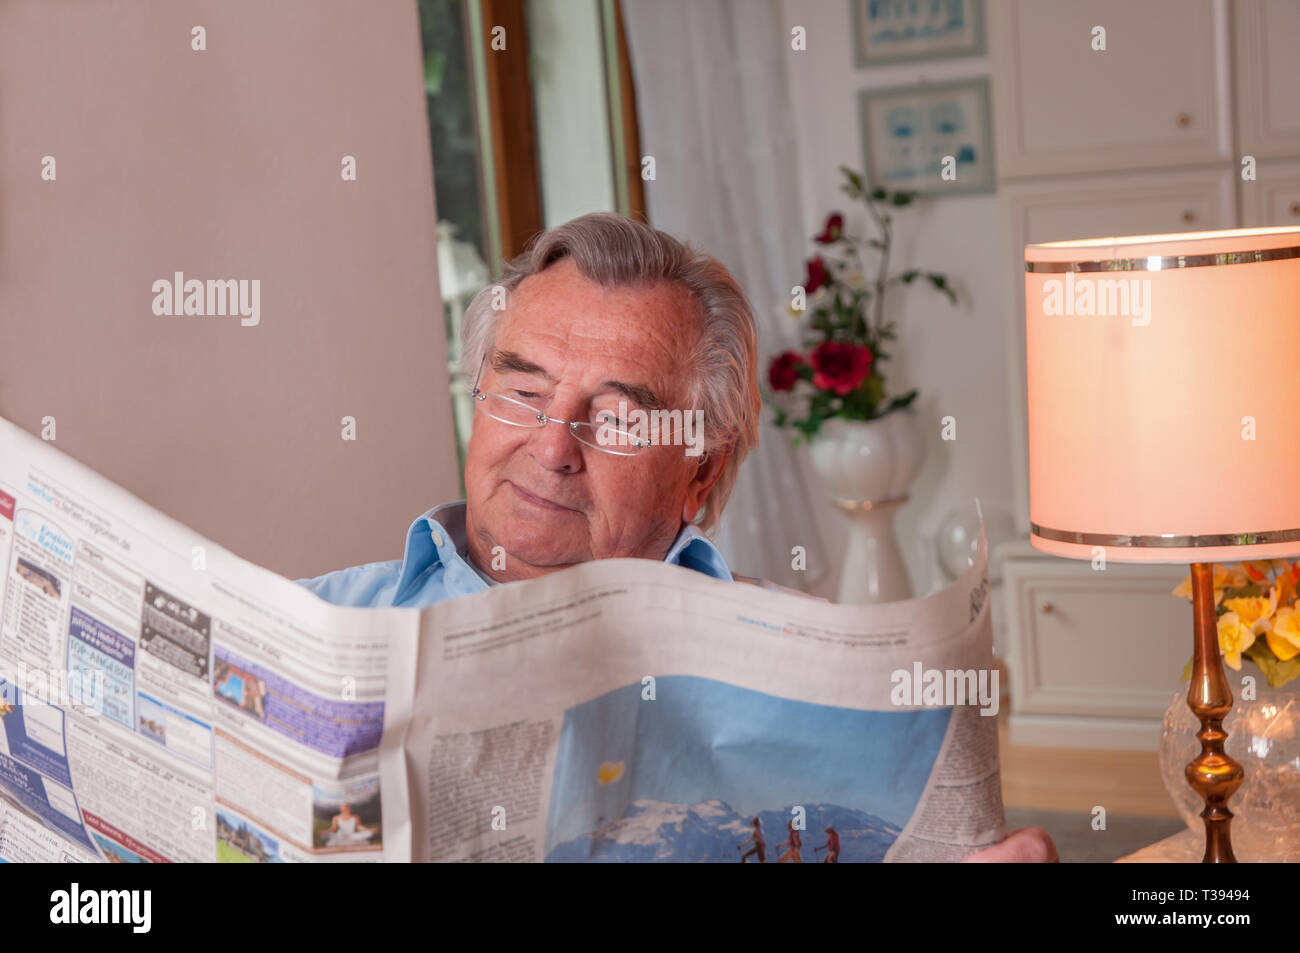 Senior with glasses reading newspaper Stock Photo